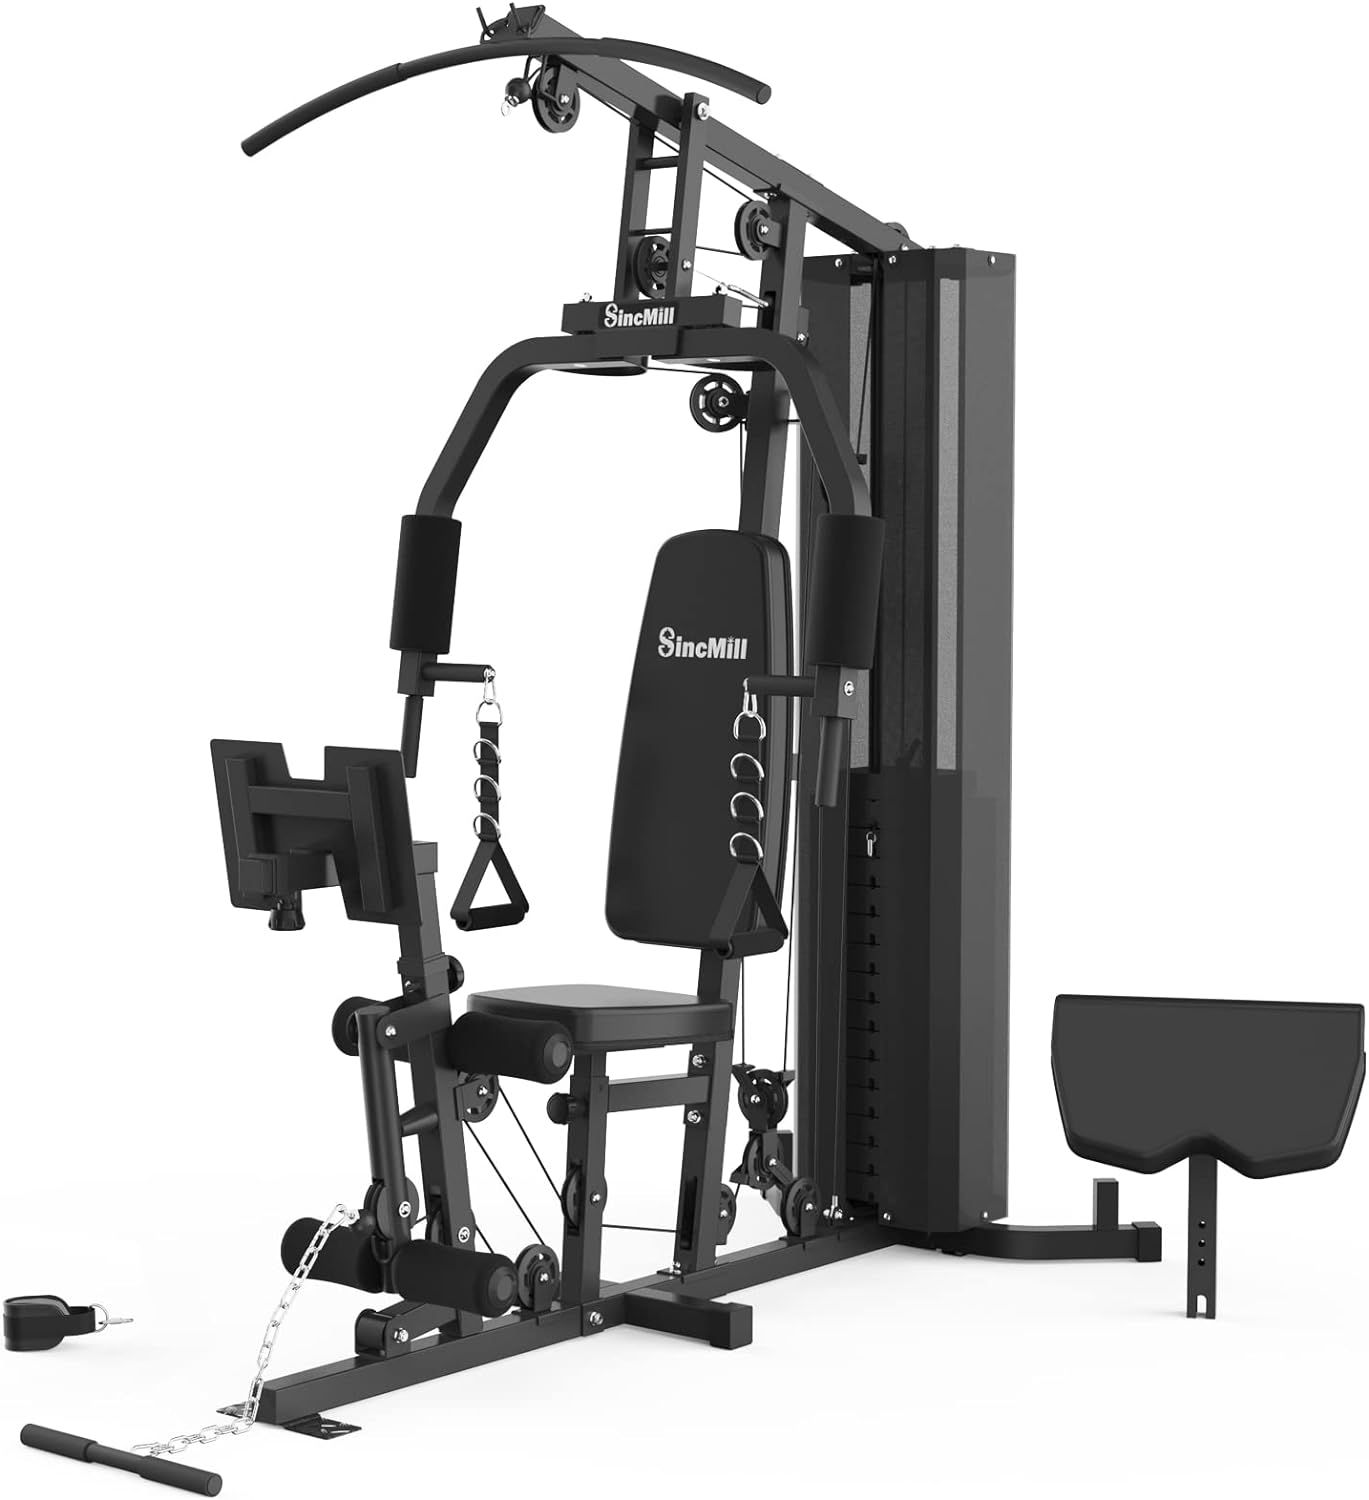 Home Gym Full Body – JX FITNESS: A Versatile and Durable Fitness Equipment  – Aurelian Blasian LLC